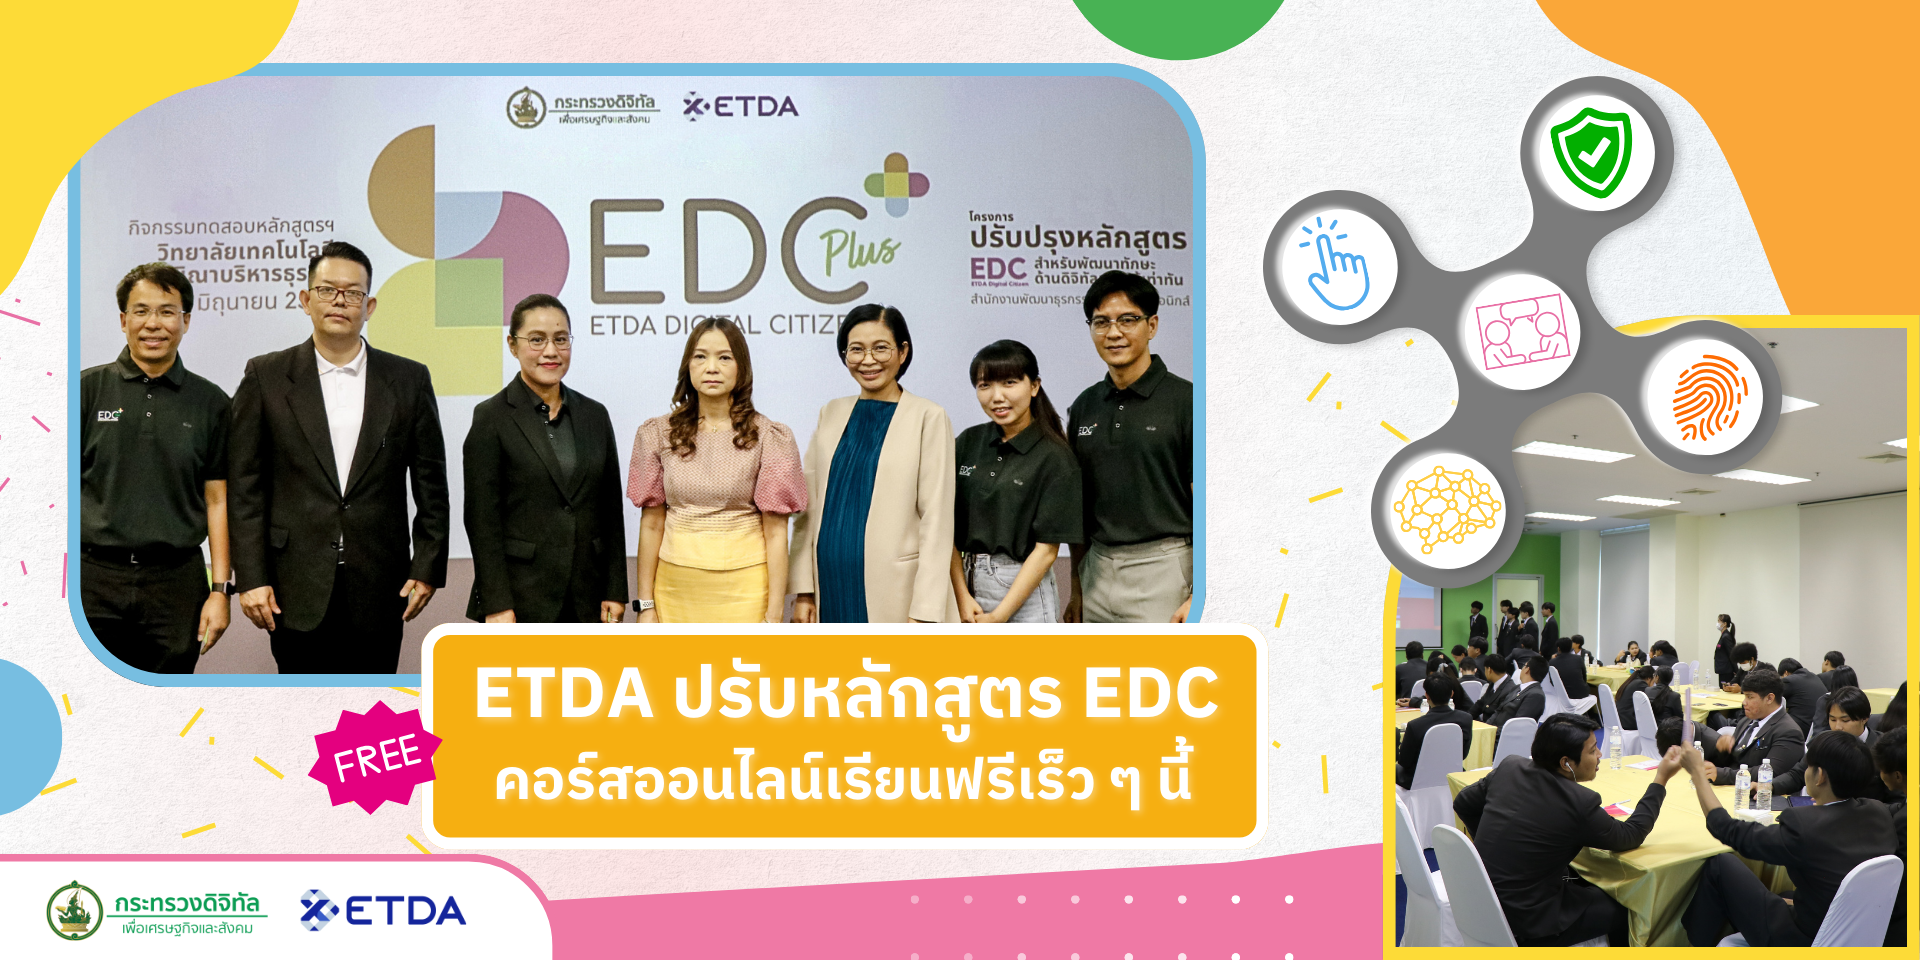 ETDA ปรับปรุงหลักสูตร EDC ยกระดับ DQ 5 ด้าน  สำหรับวัยแรกเข้าทำงาน “First Jobber” เตรียมเปิดให้เรียน